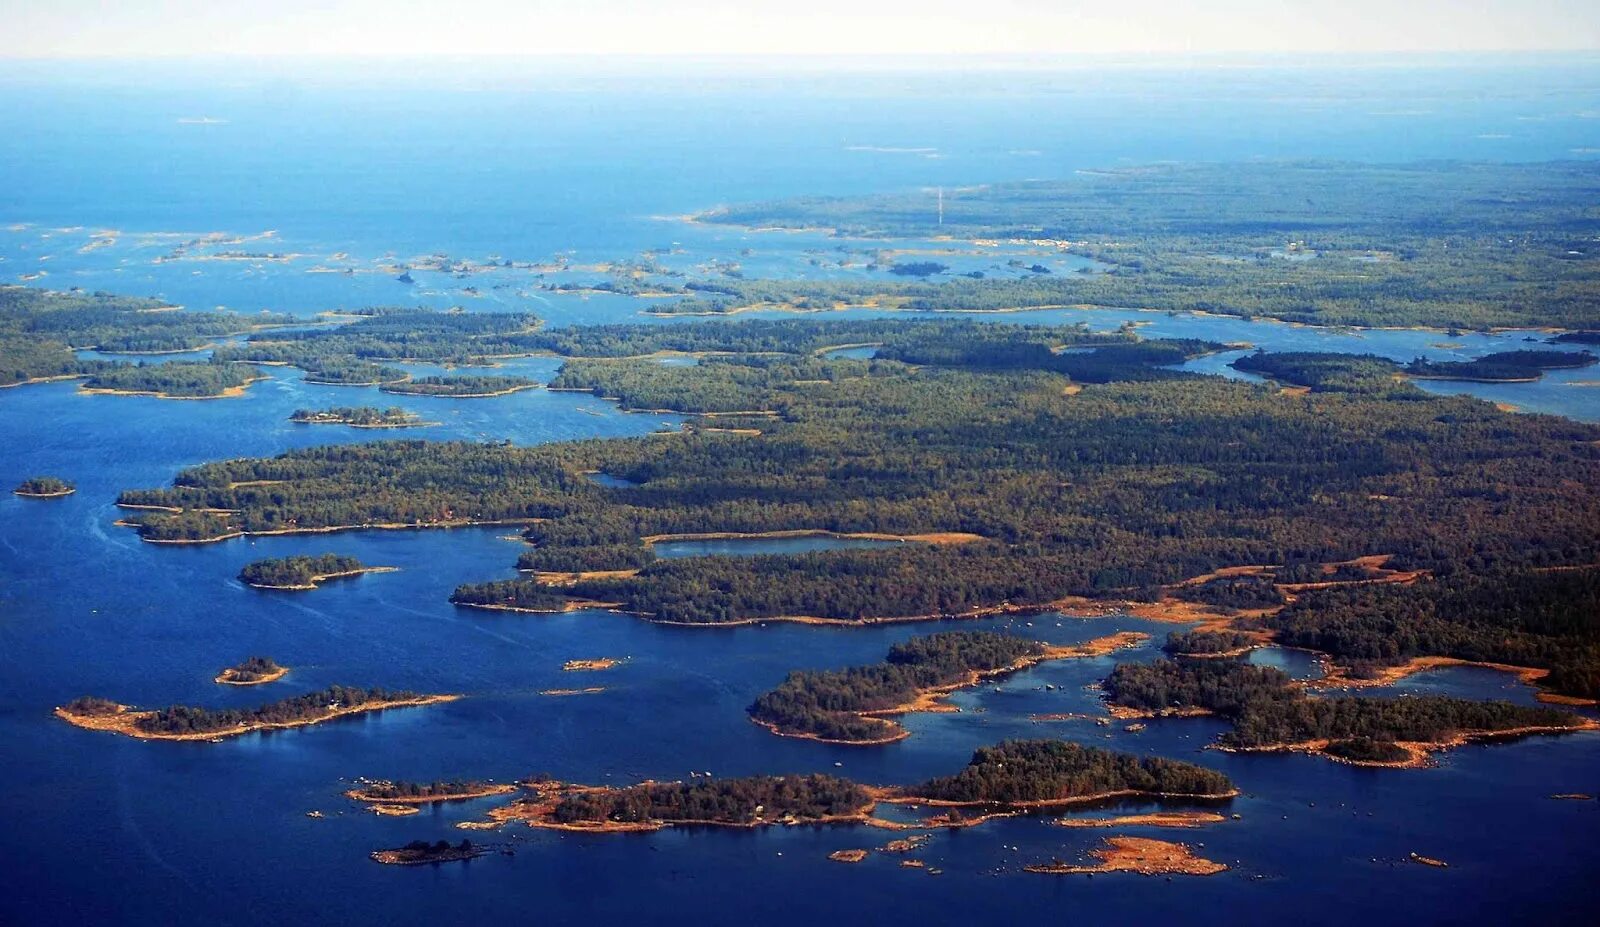 Озерное плато Финляндии. Финляндия Страна тысячи озер. Финляндия тысяча озер. Финляндия Страна 1000 озер. Водная система озер